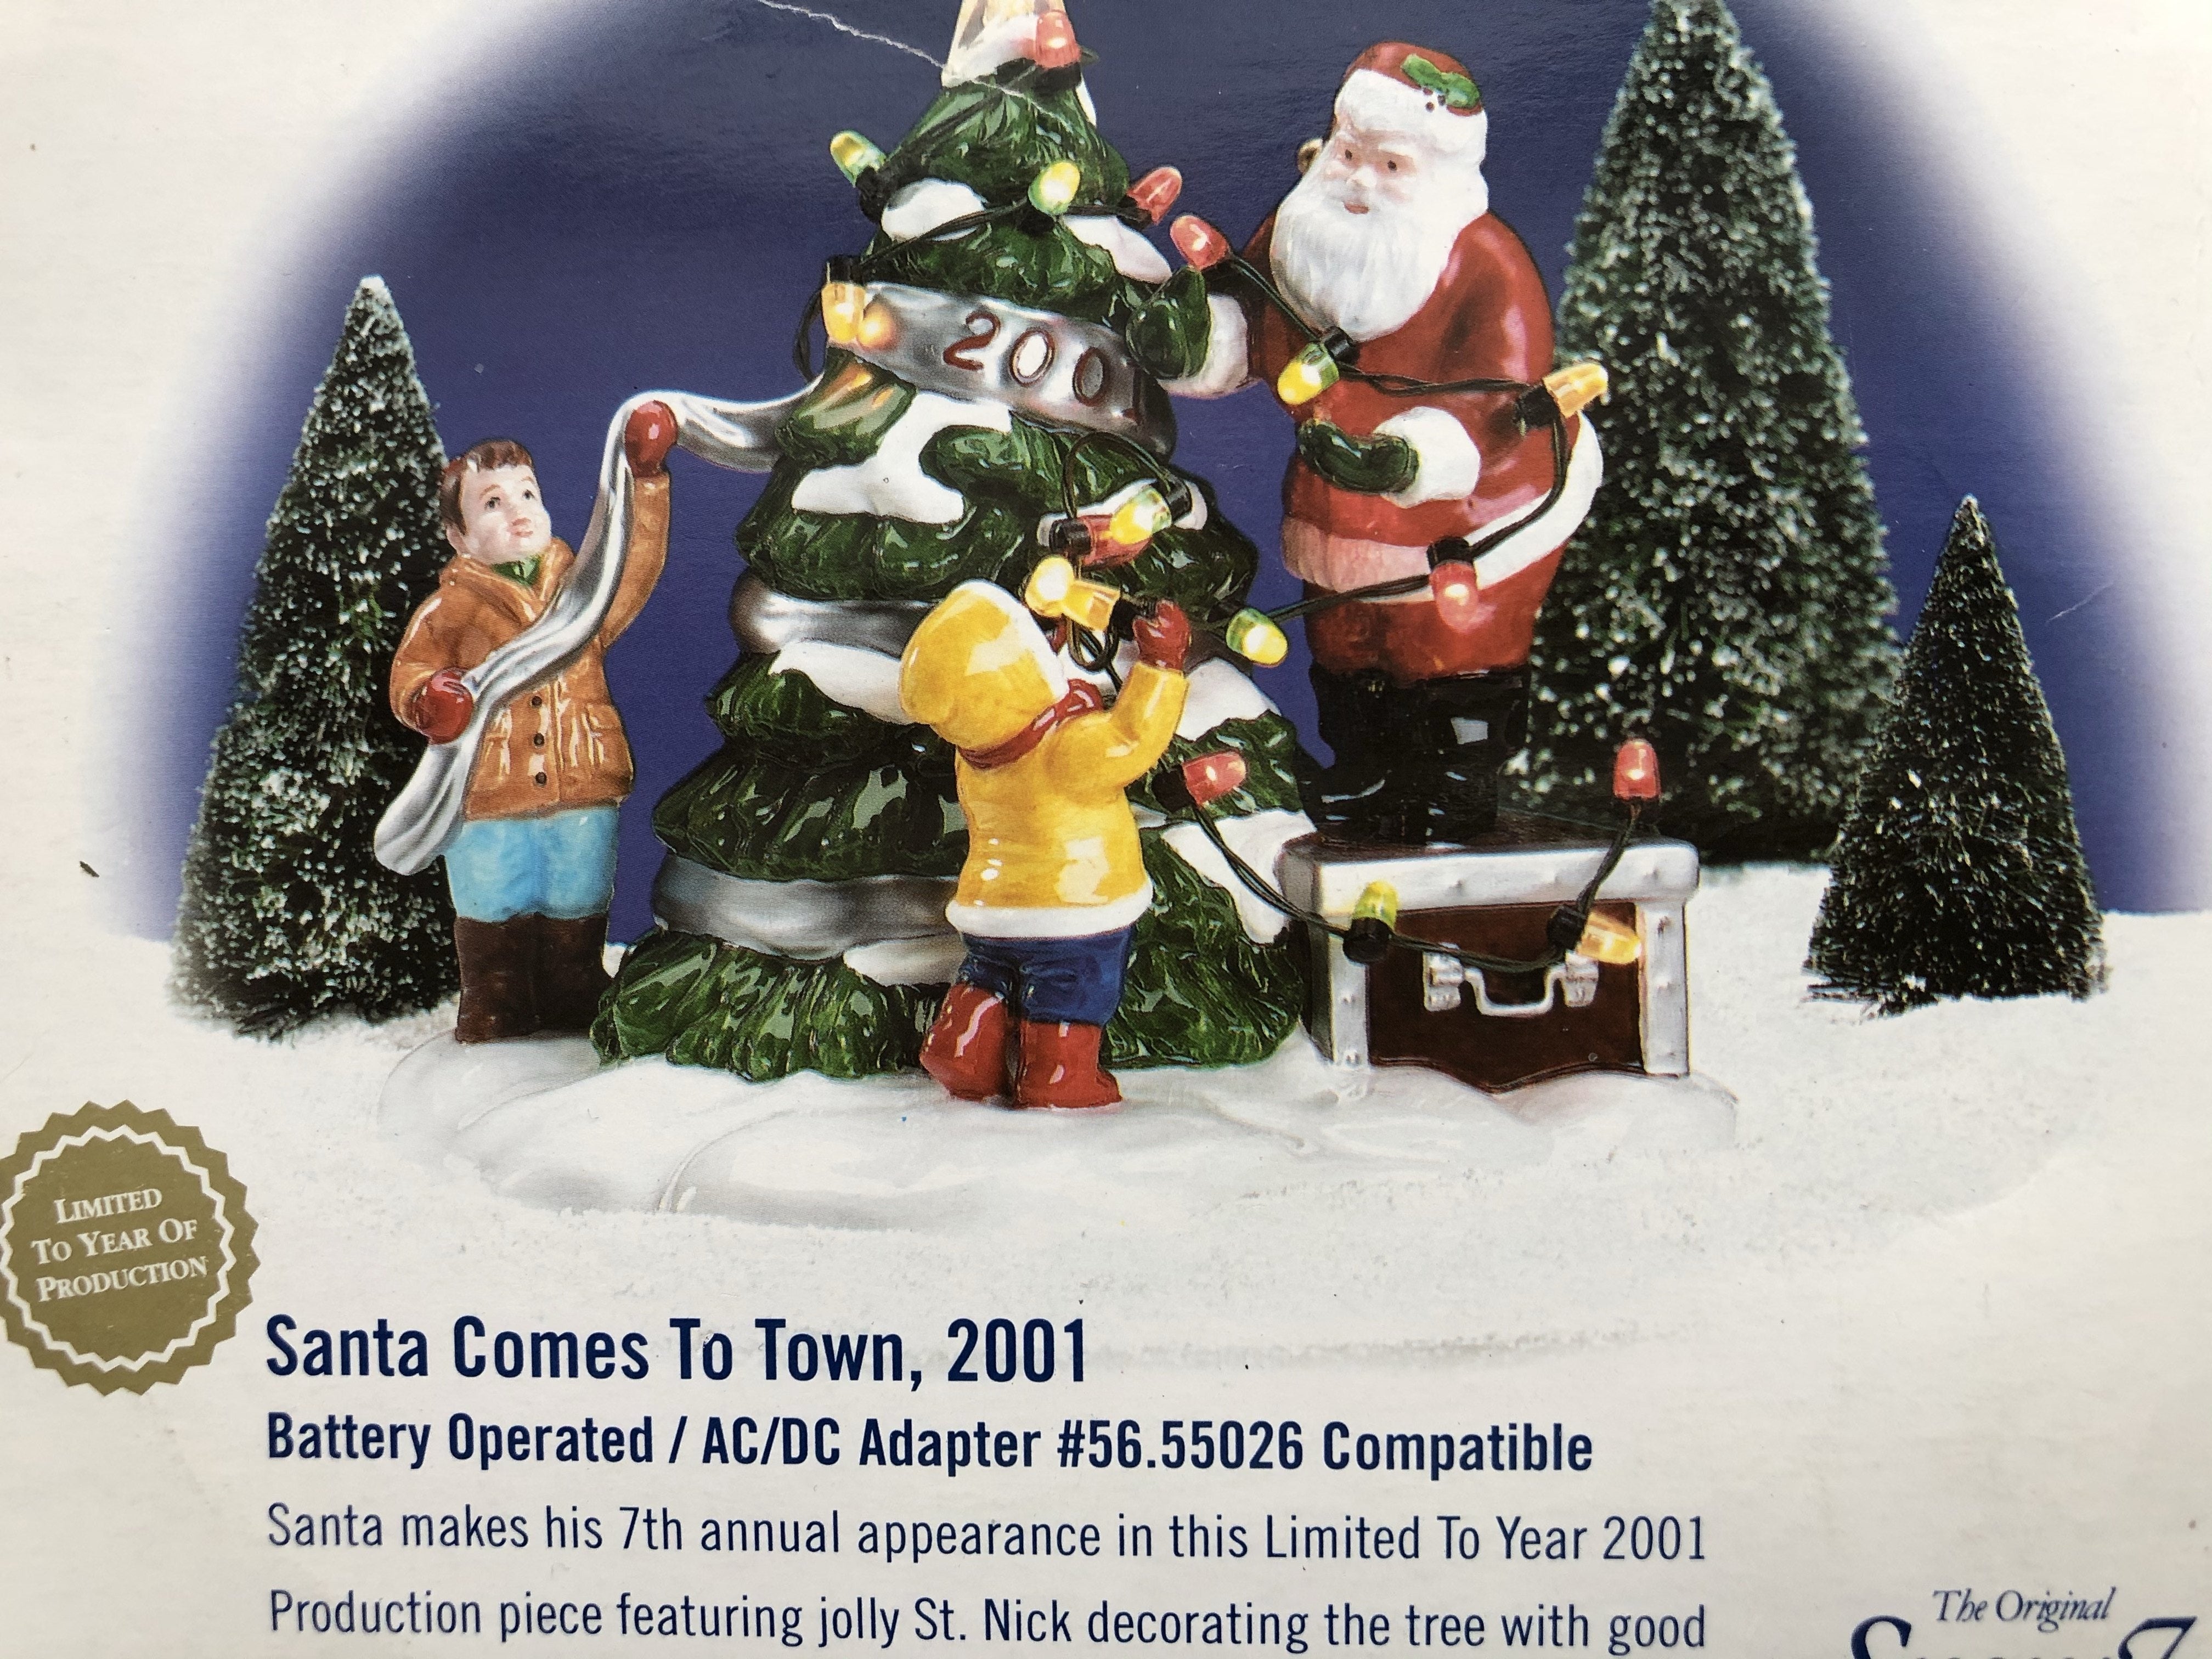 Santa Comes to Town "2001"